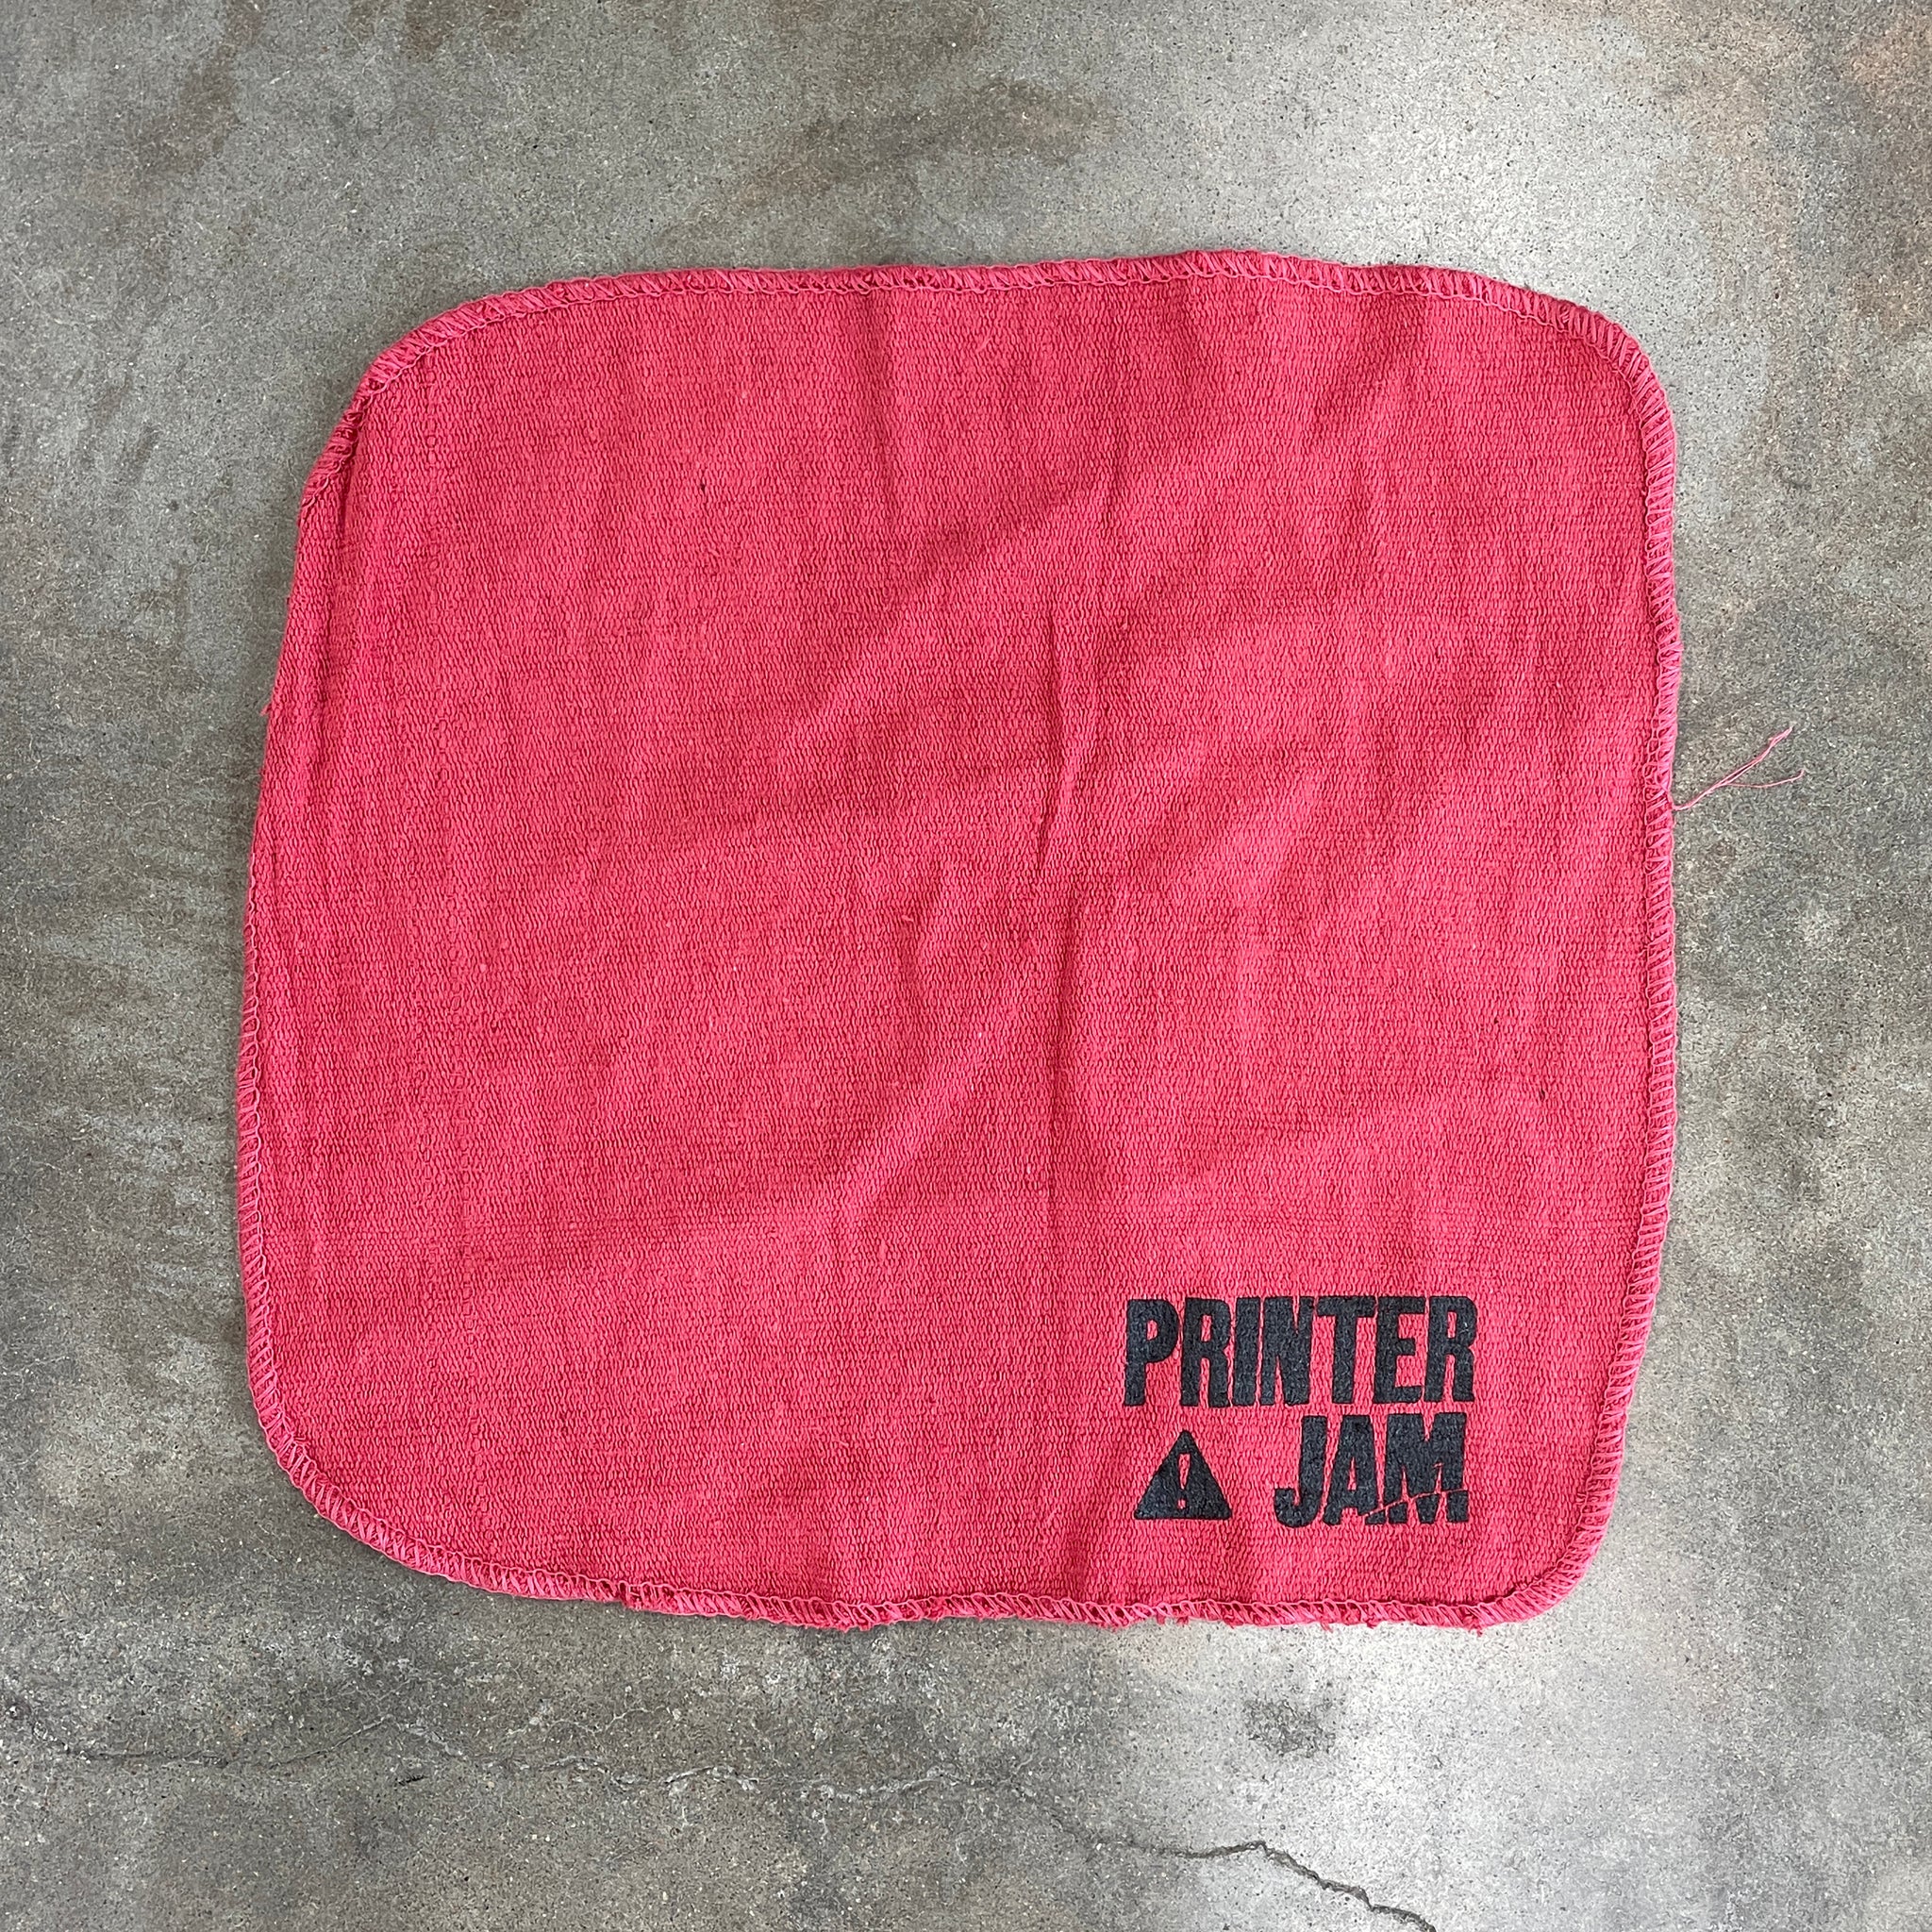 Printer Jam shop rag